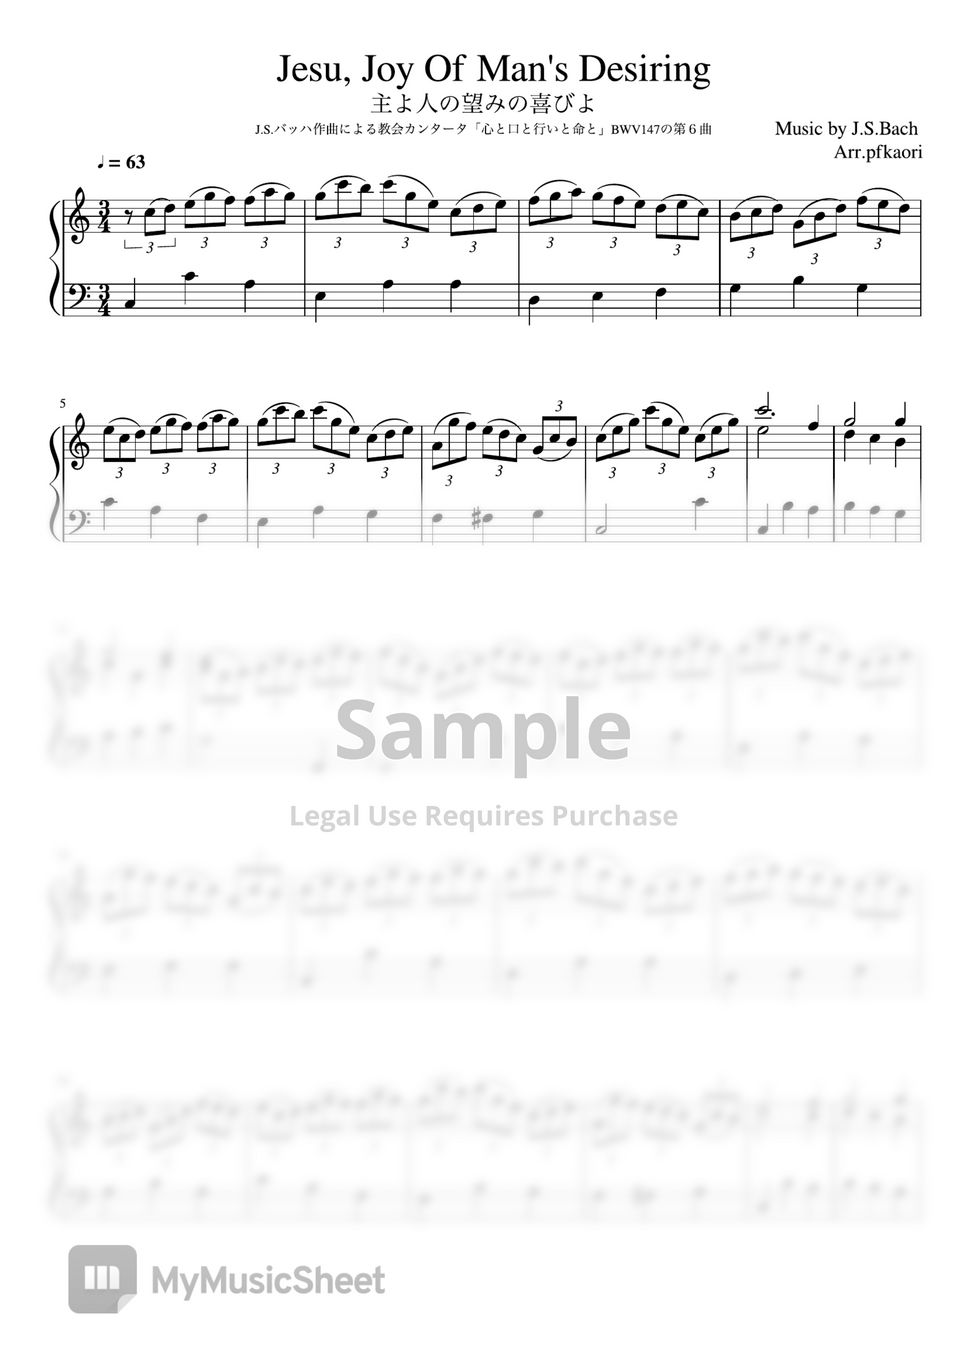 J.S.Bach - Jesu, joyOfMan'sDesiring(C) (pianosolobeginner) by pfkaori